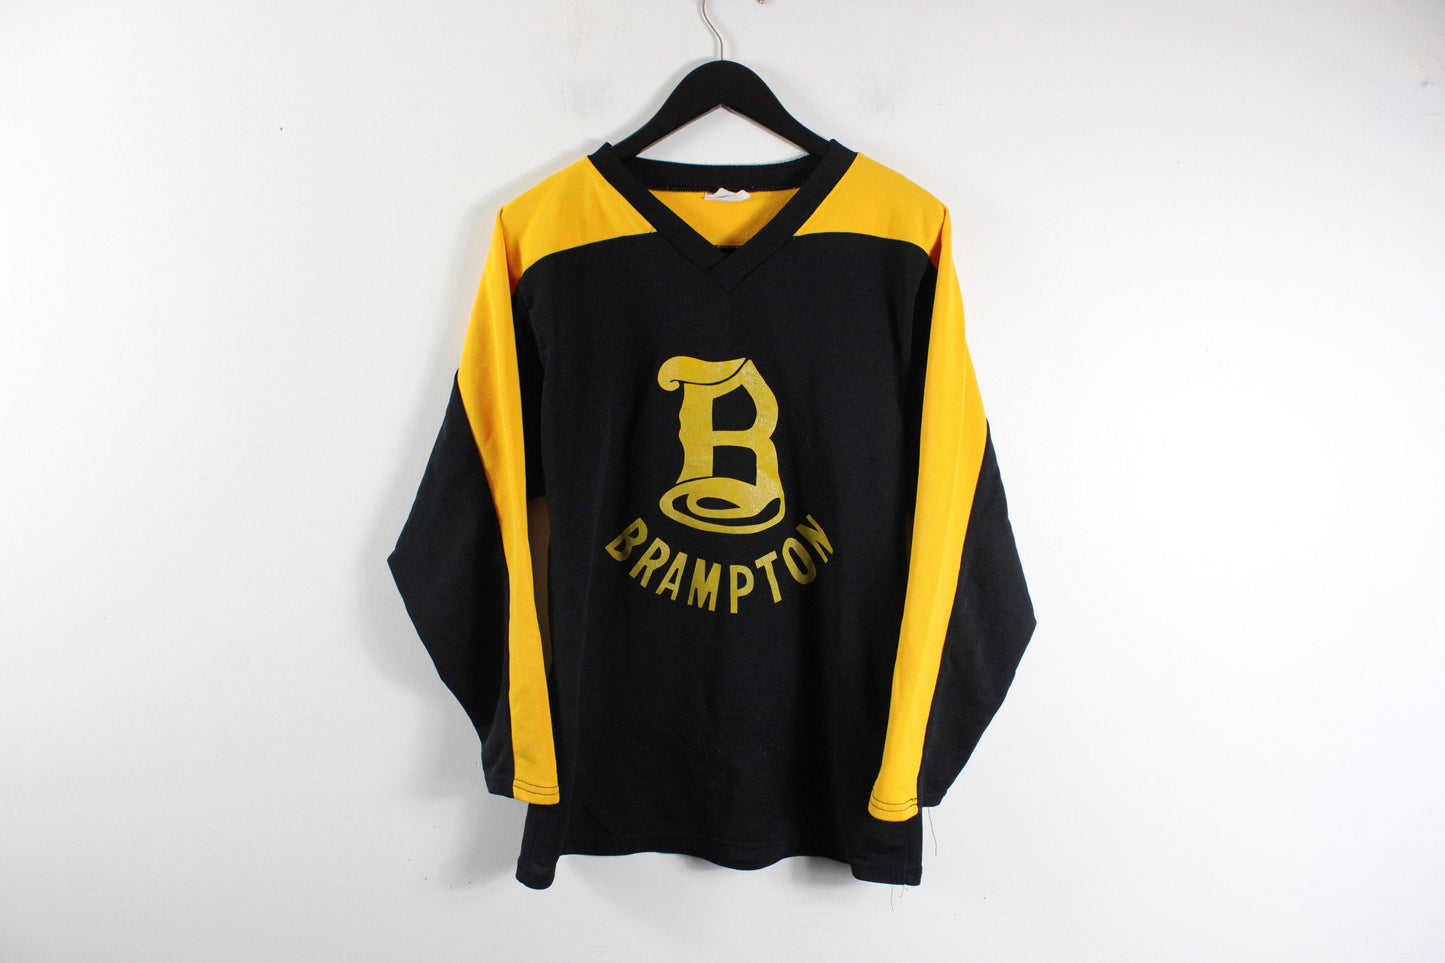 Brampton-Battalion Jersey / Vintage OHL-CHL Hockey / Ontario Canada / Stitched Sports Team Uniform / 90s Canadian